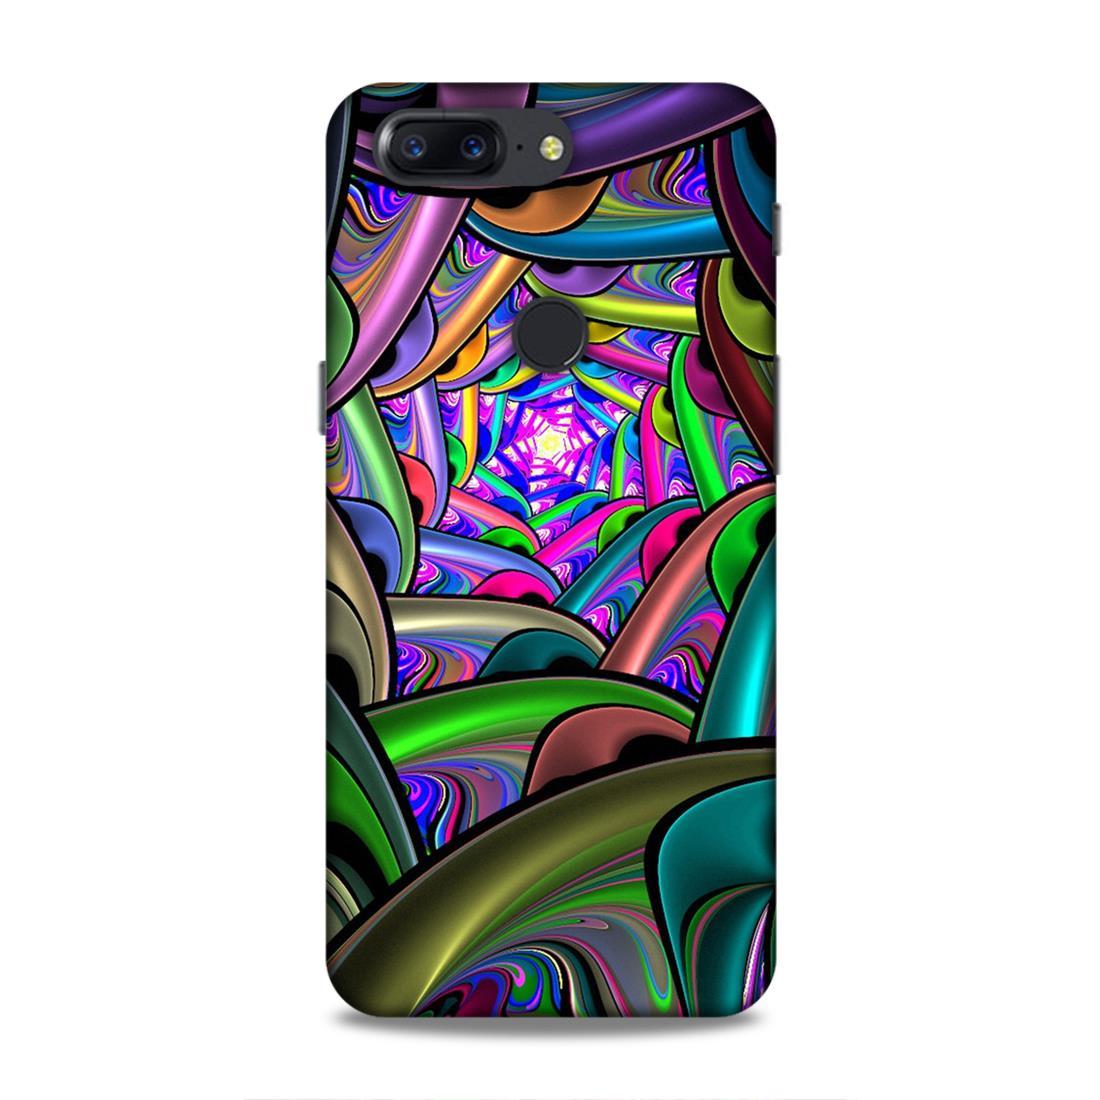 Deep Multicolour OnePlus 5T Mobile Cover